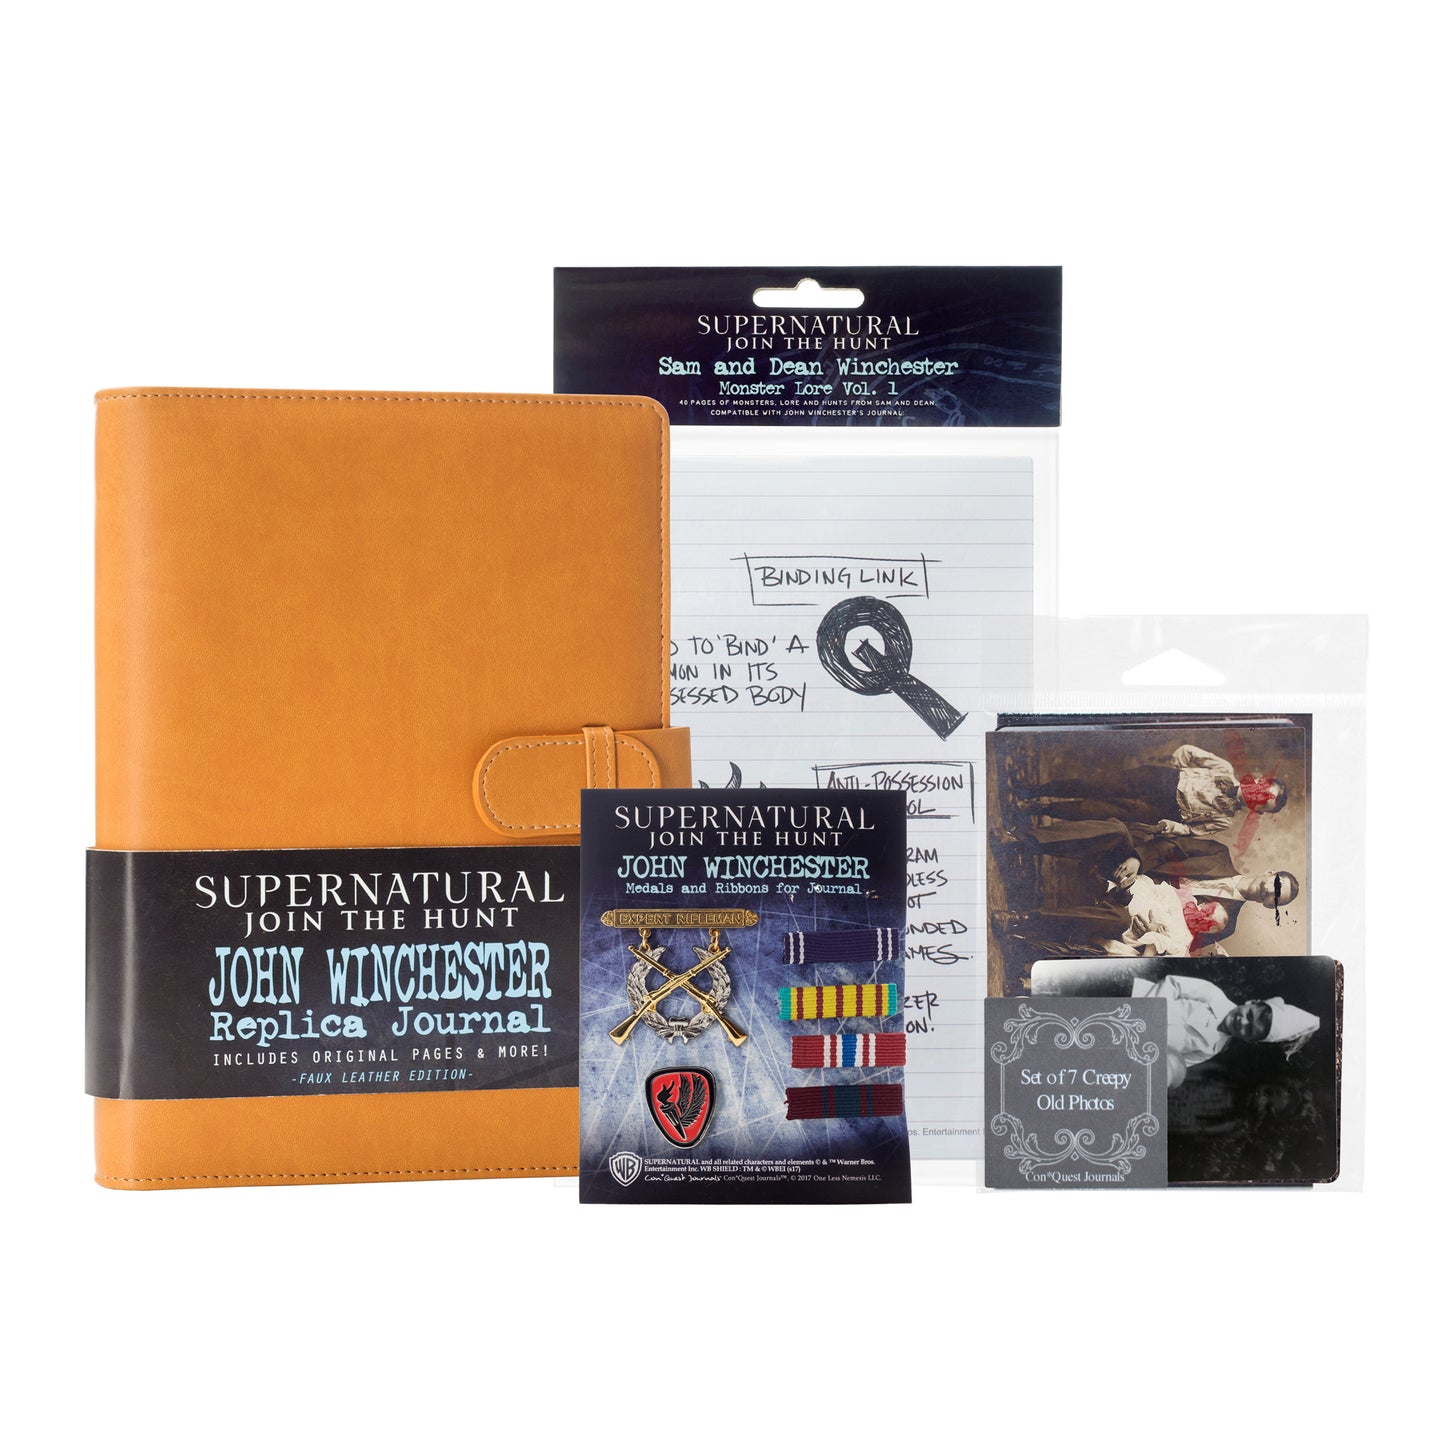 Supernatural John Winchester Replica Journal Deluxe Bundle